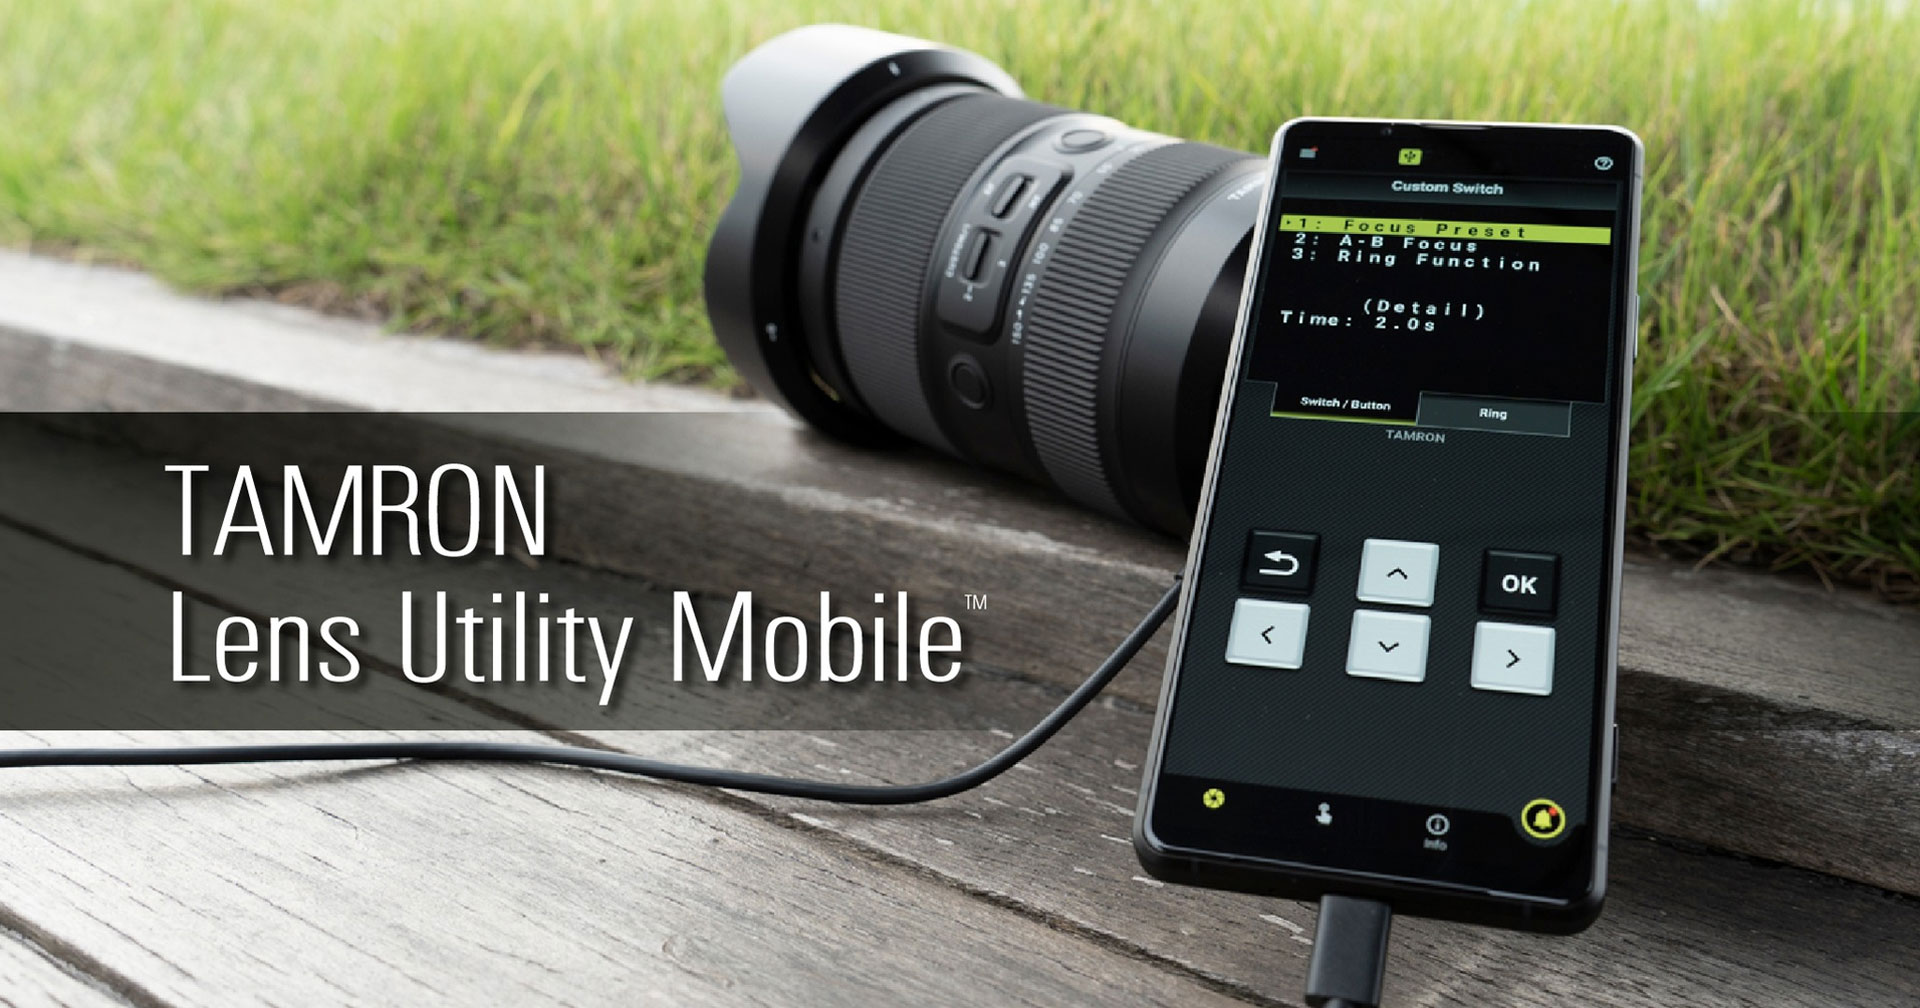 TAMRON ประกาศพัฒนาแอป Lens Utility Mobile ปรับตั้งค่าเลนส์ได้ทุกที่ ผ่านสมาร์ตโฟน android